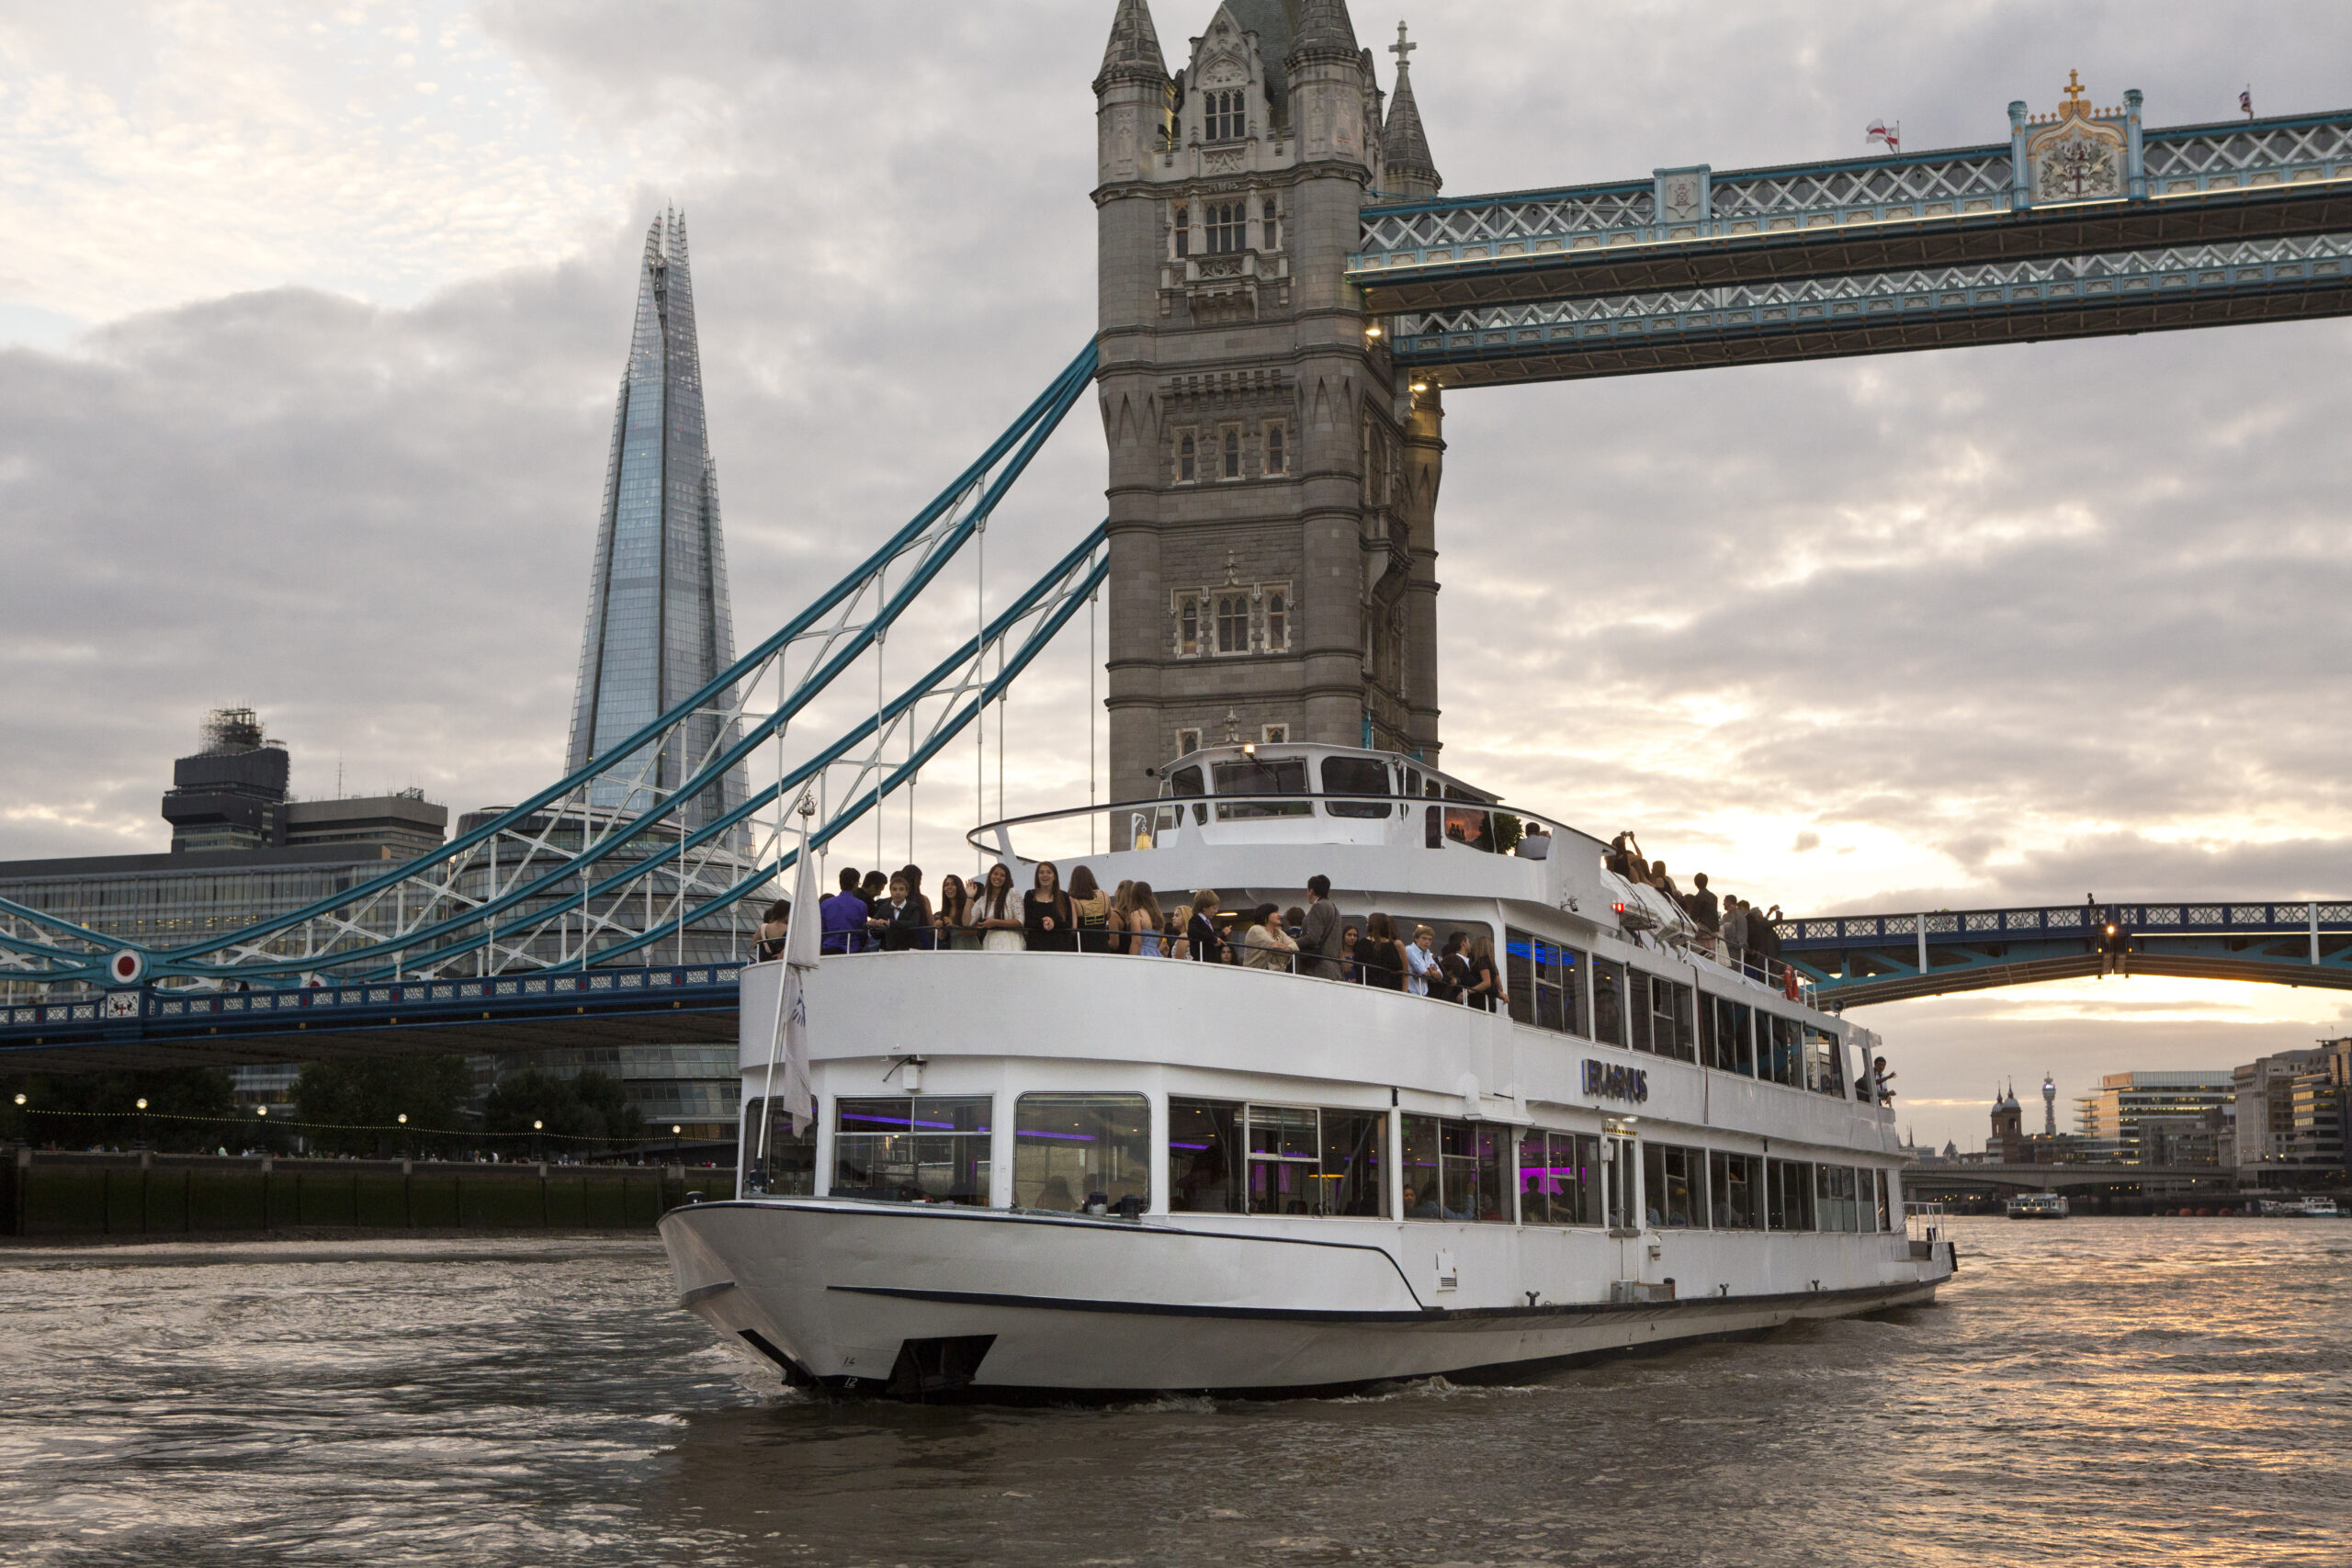 city cruises london boat timetable